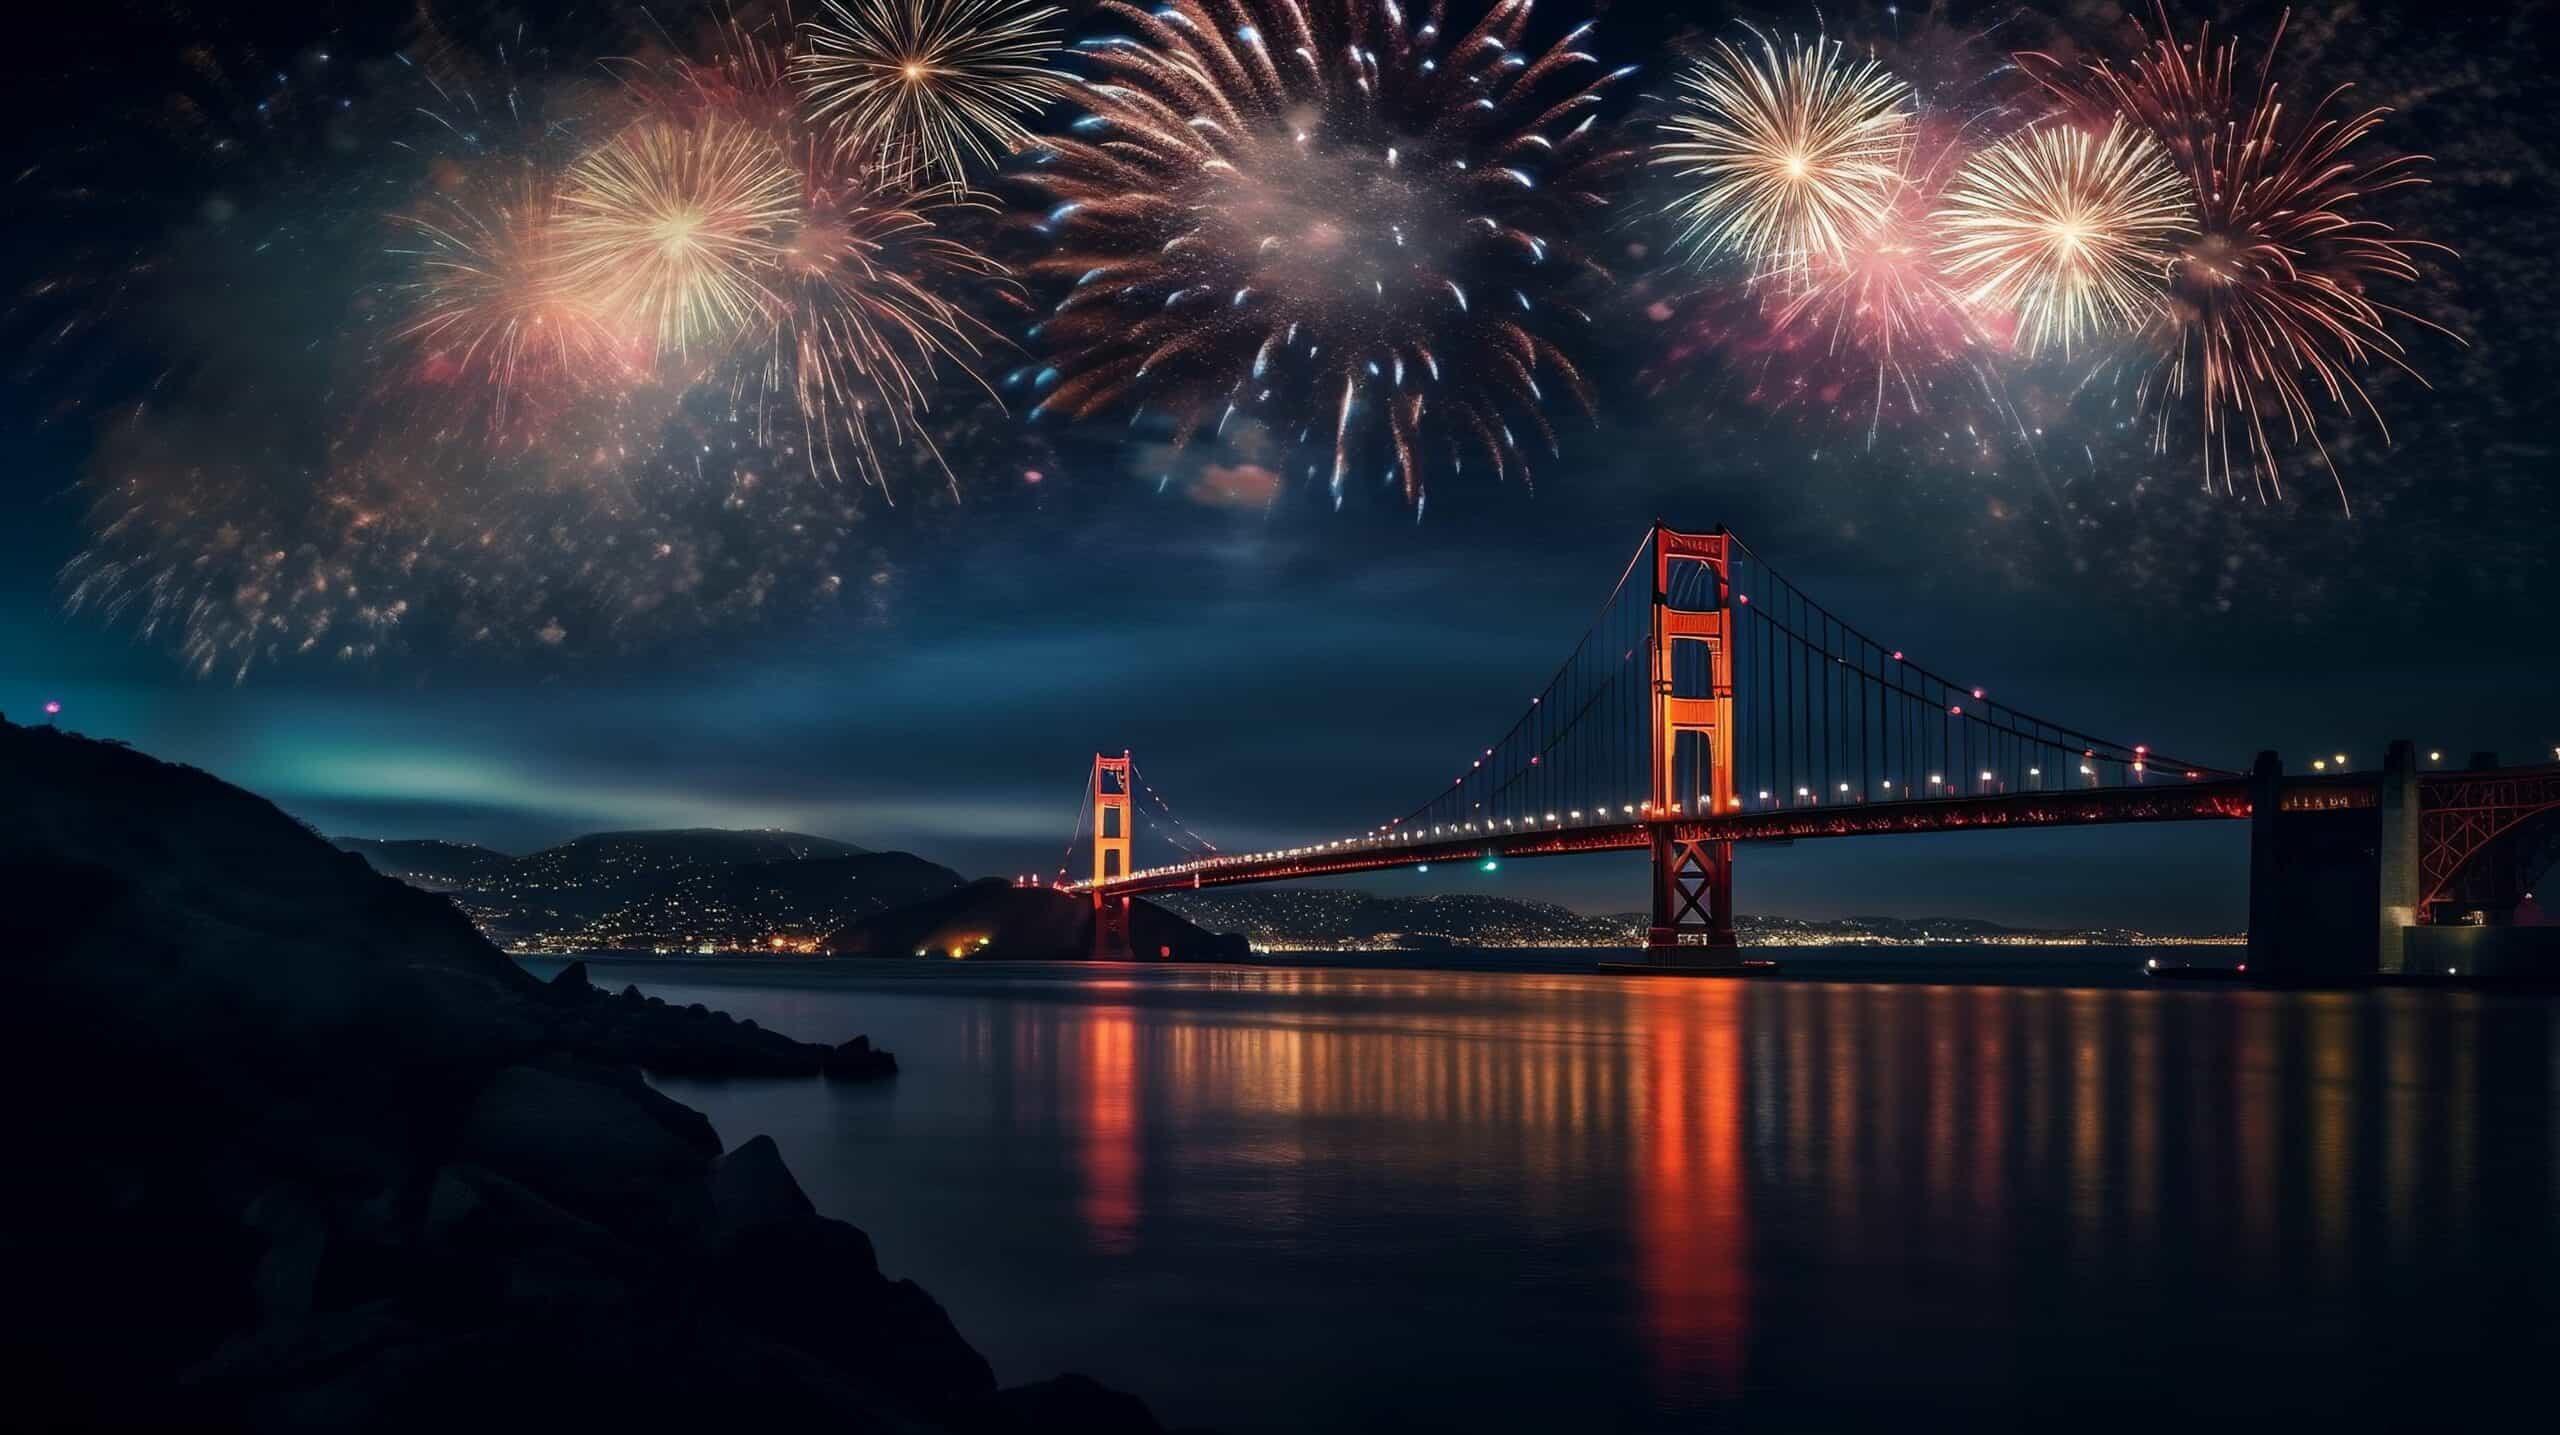 Fireworks happening over the Golden Gate Bridge in San Francisco.